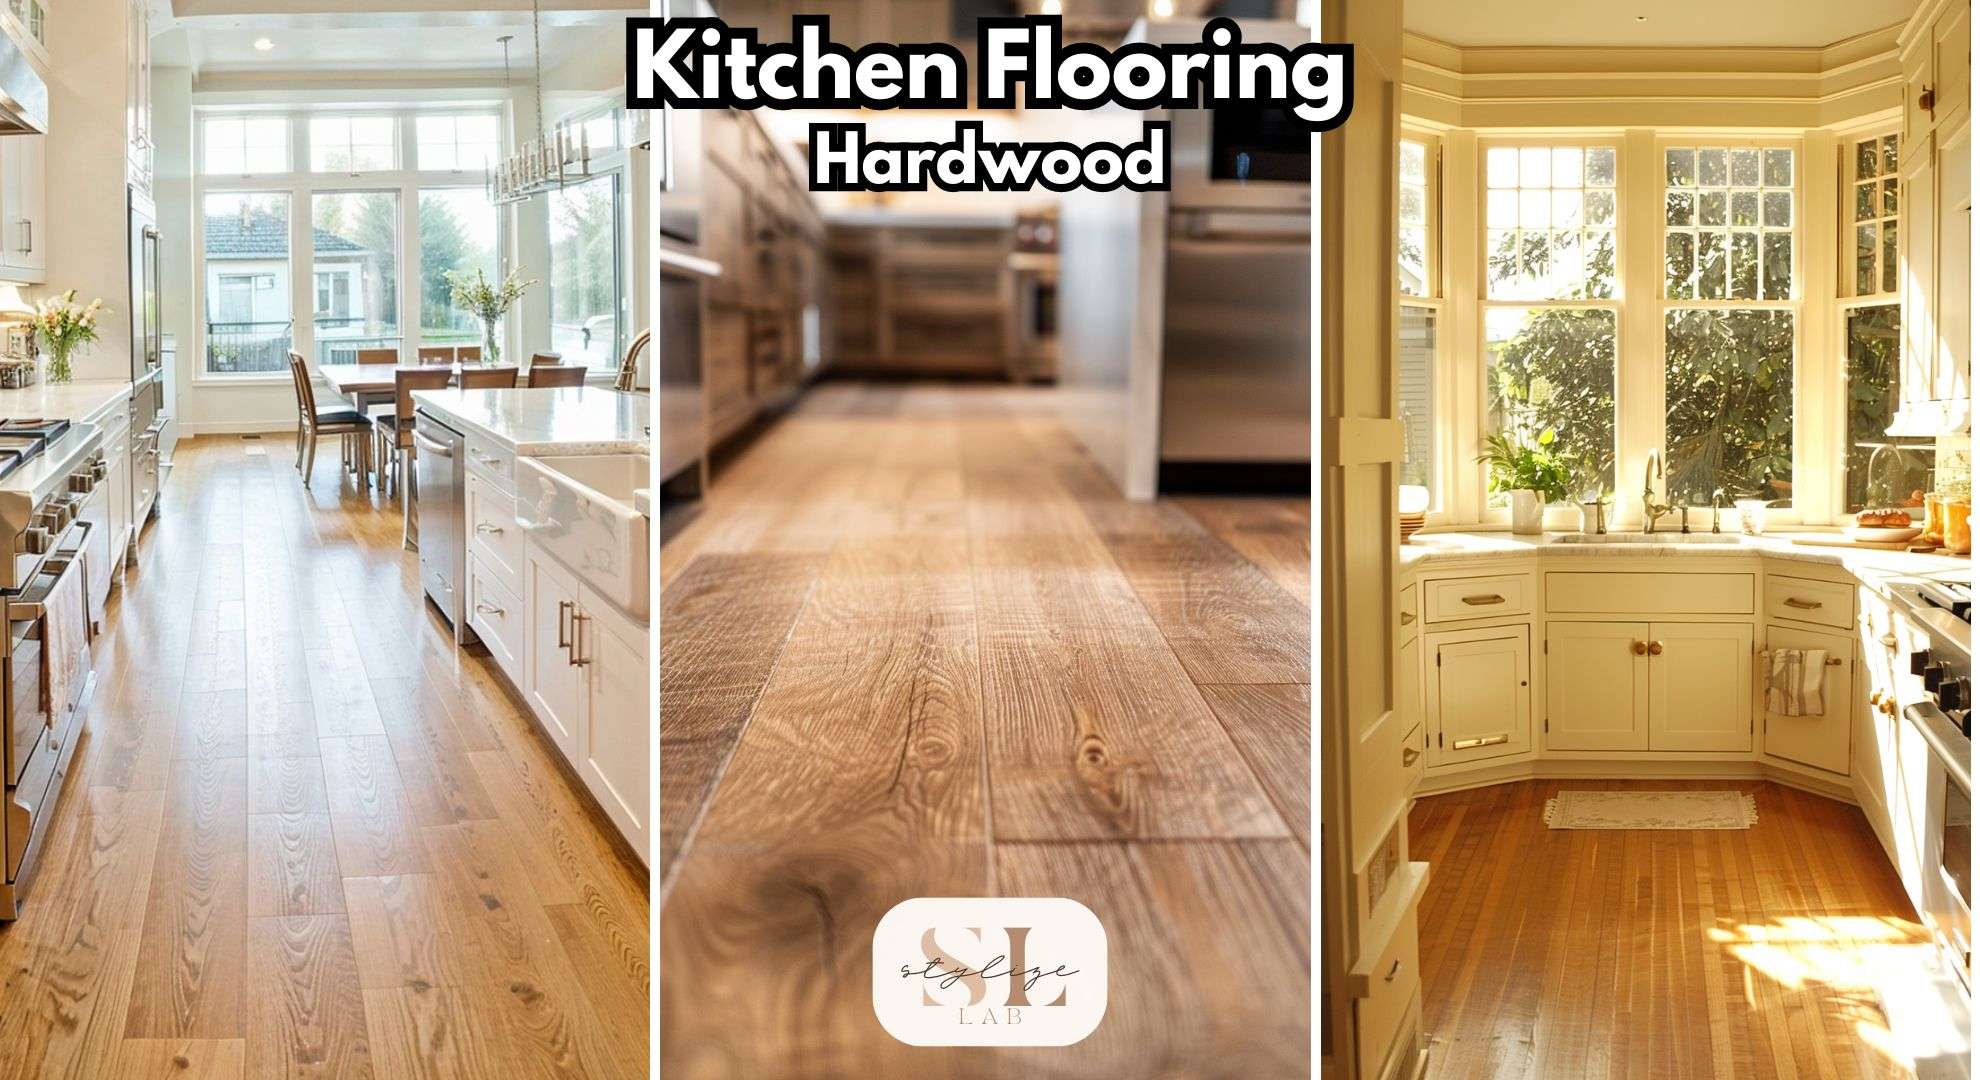 Cozy kitchen with honey-colored hardwood floors, weathered gray oak flooring